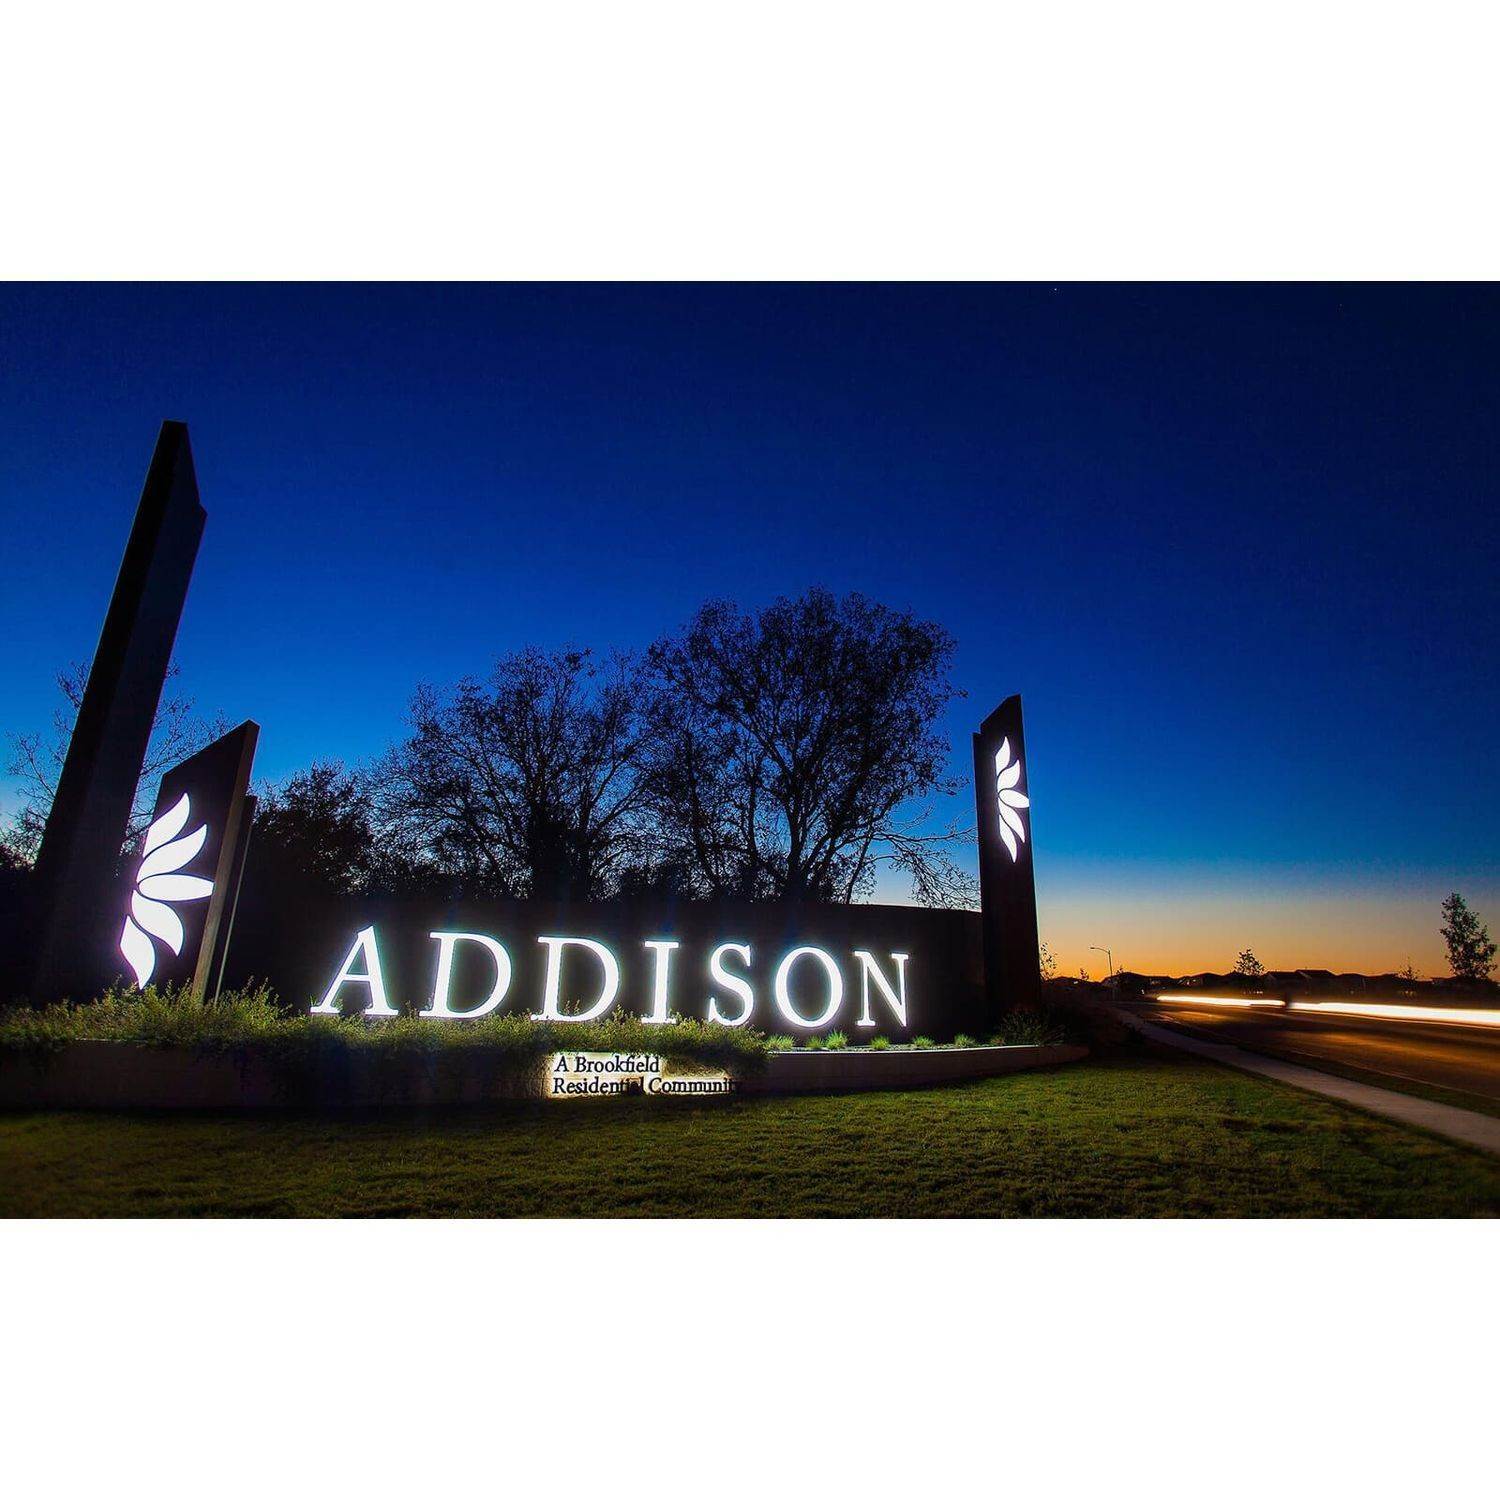 7. Addison South Neighborhood at Addison gebouw op 8200 Greyhawk Cv., Southeast Austin, Austin, TX 78744